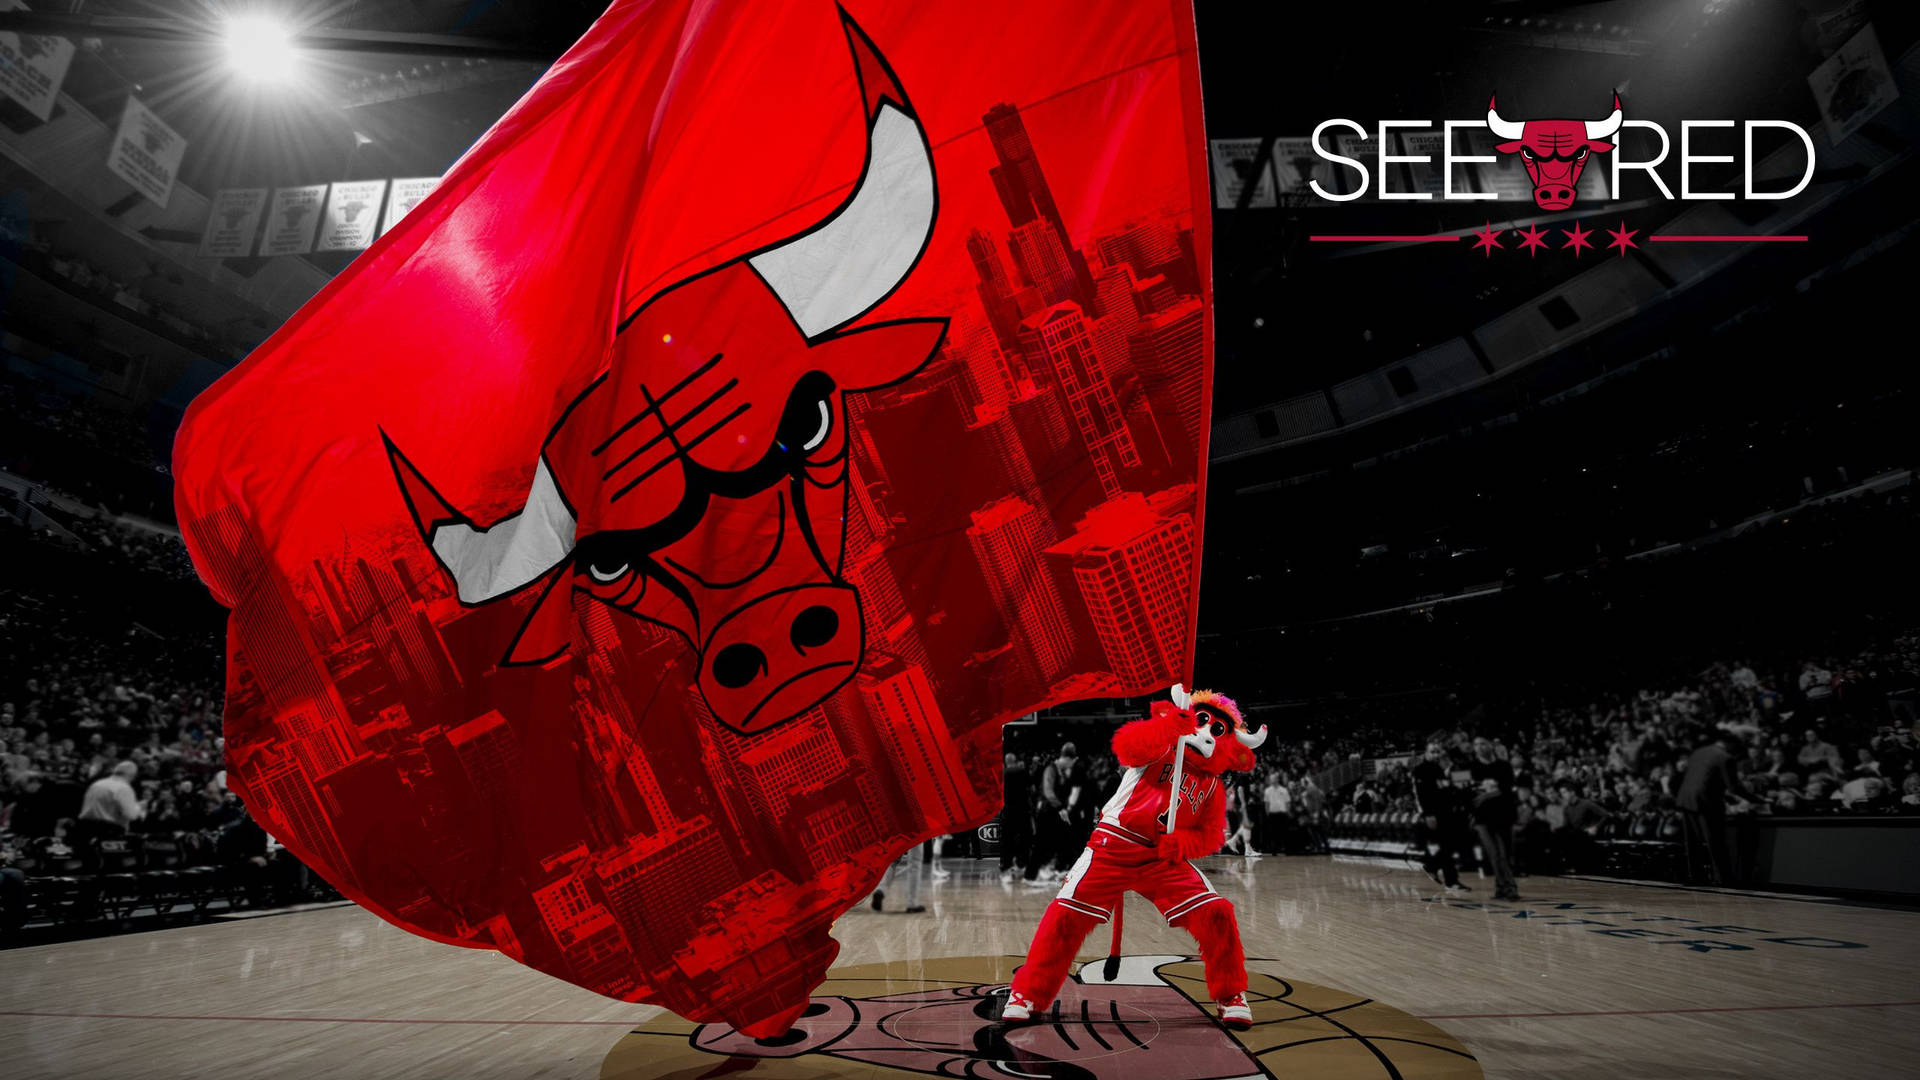 Chicago Bulls, HD wallpaper